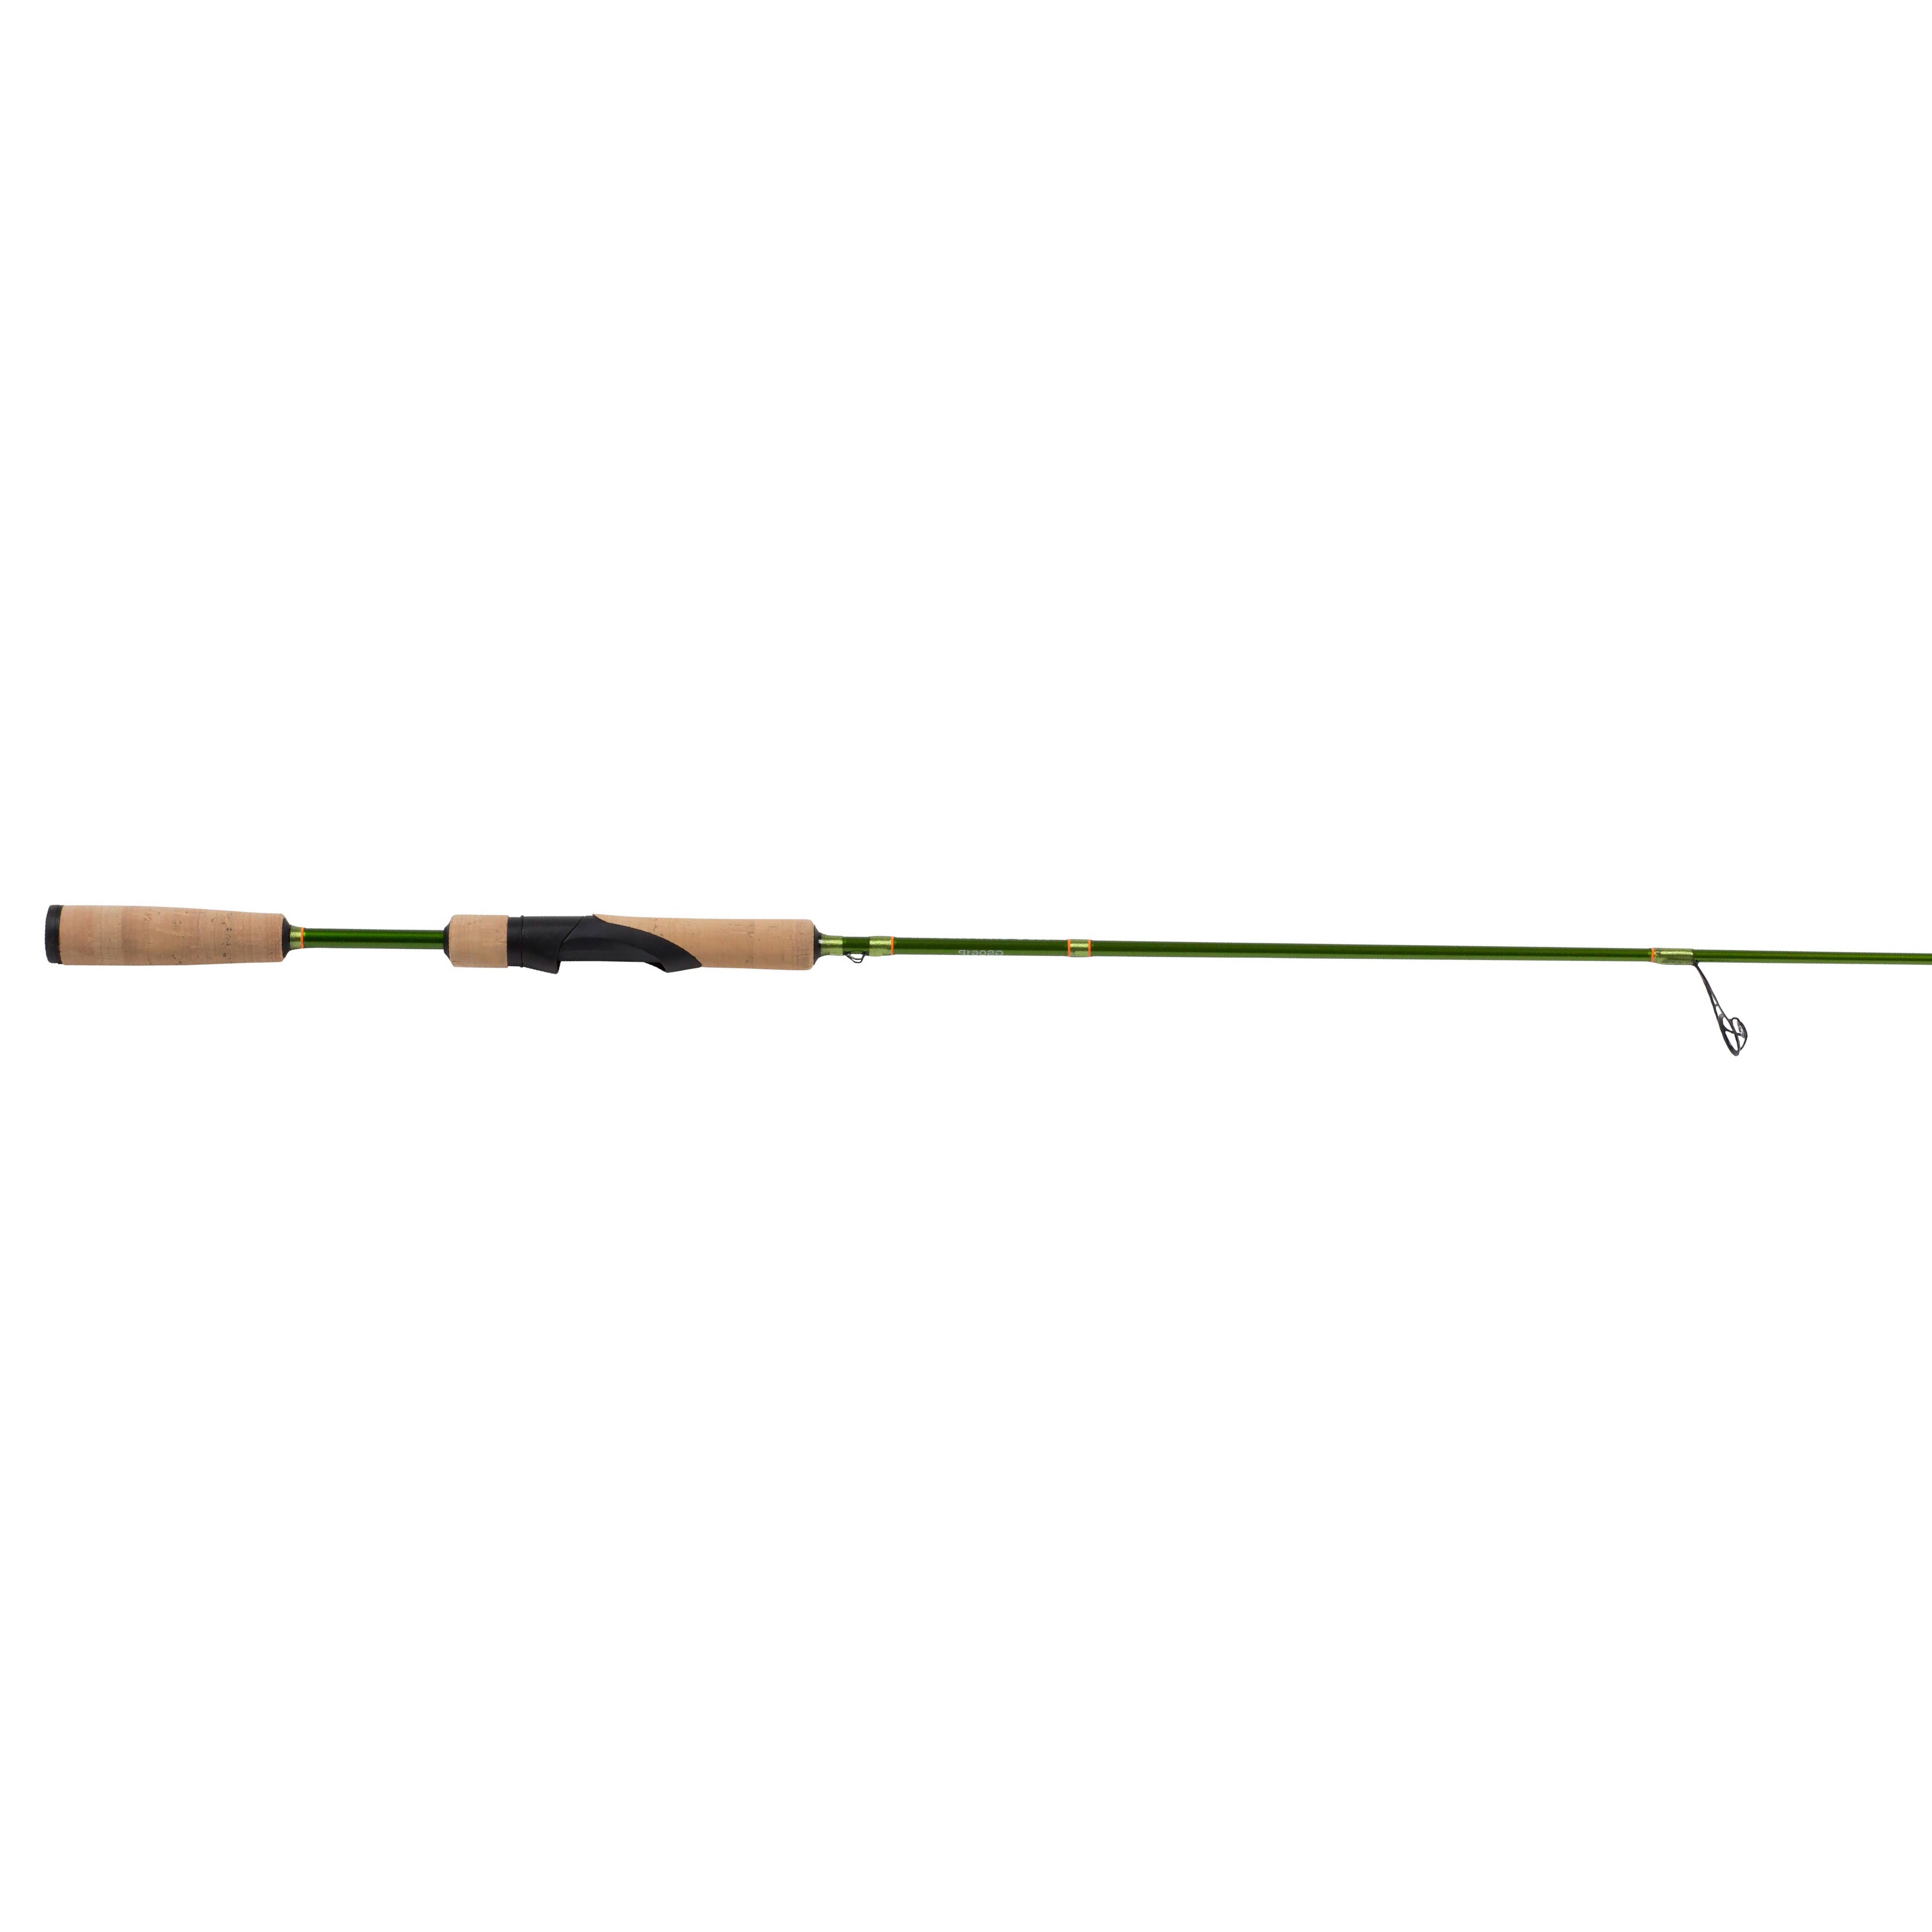 ACC Crappie Stix Green Series Dock Shooter Spinning Rod - 6' - Medium